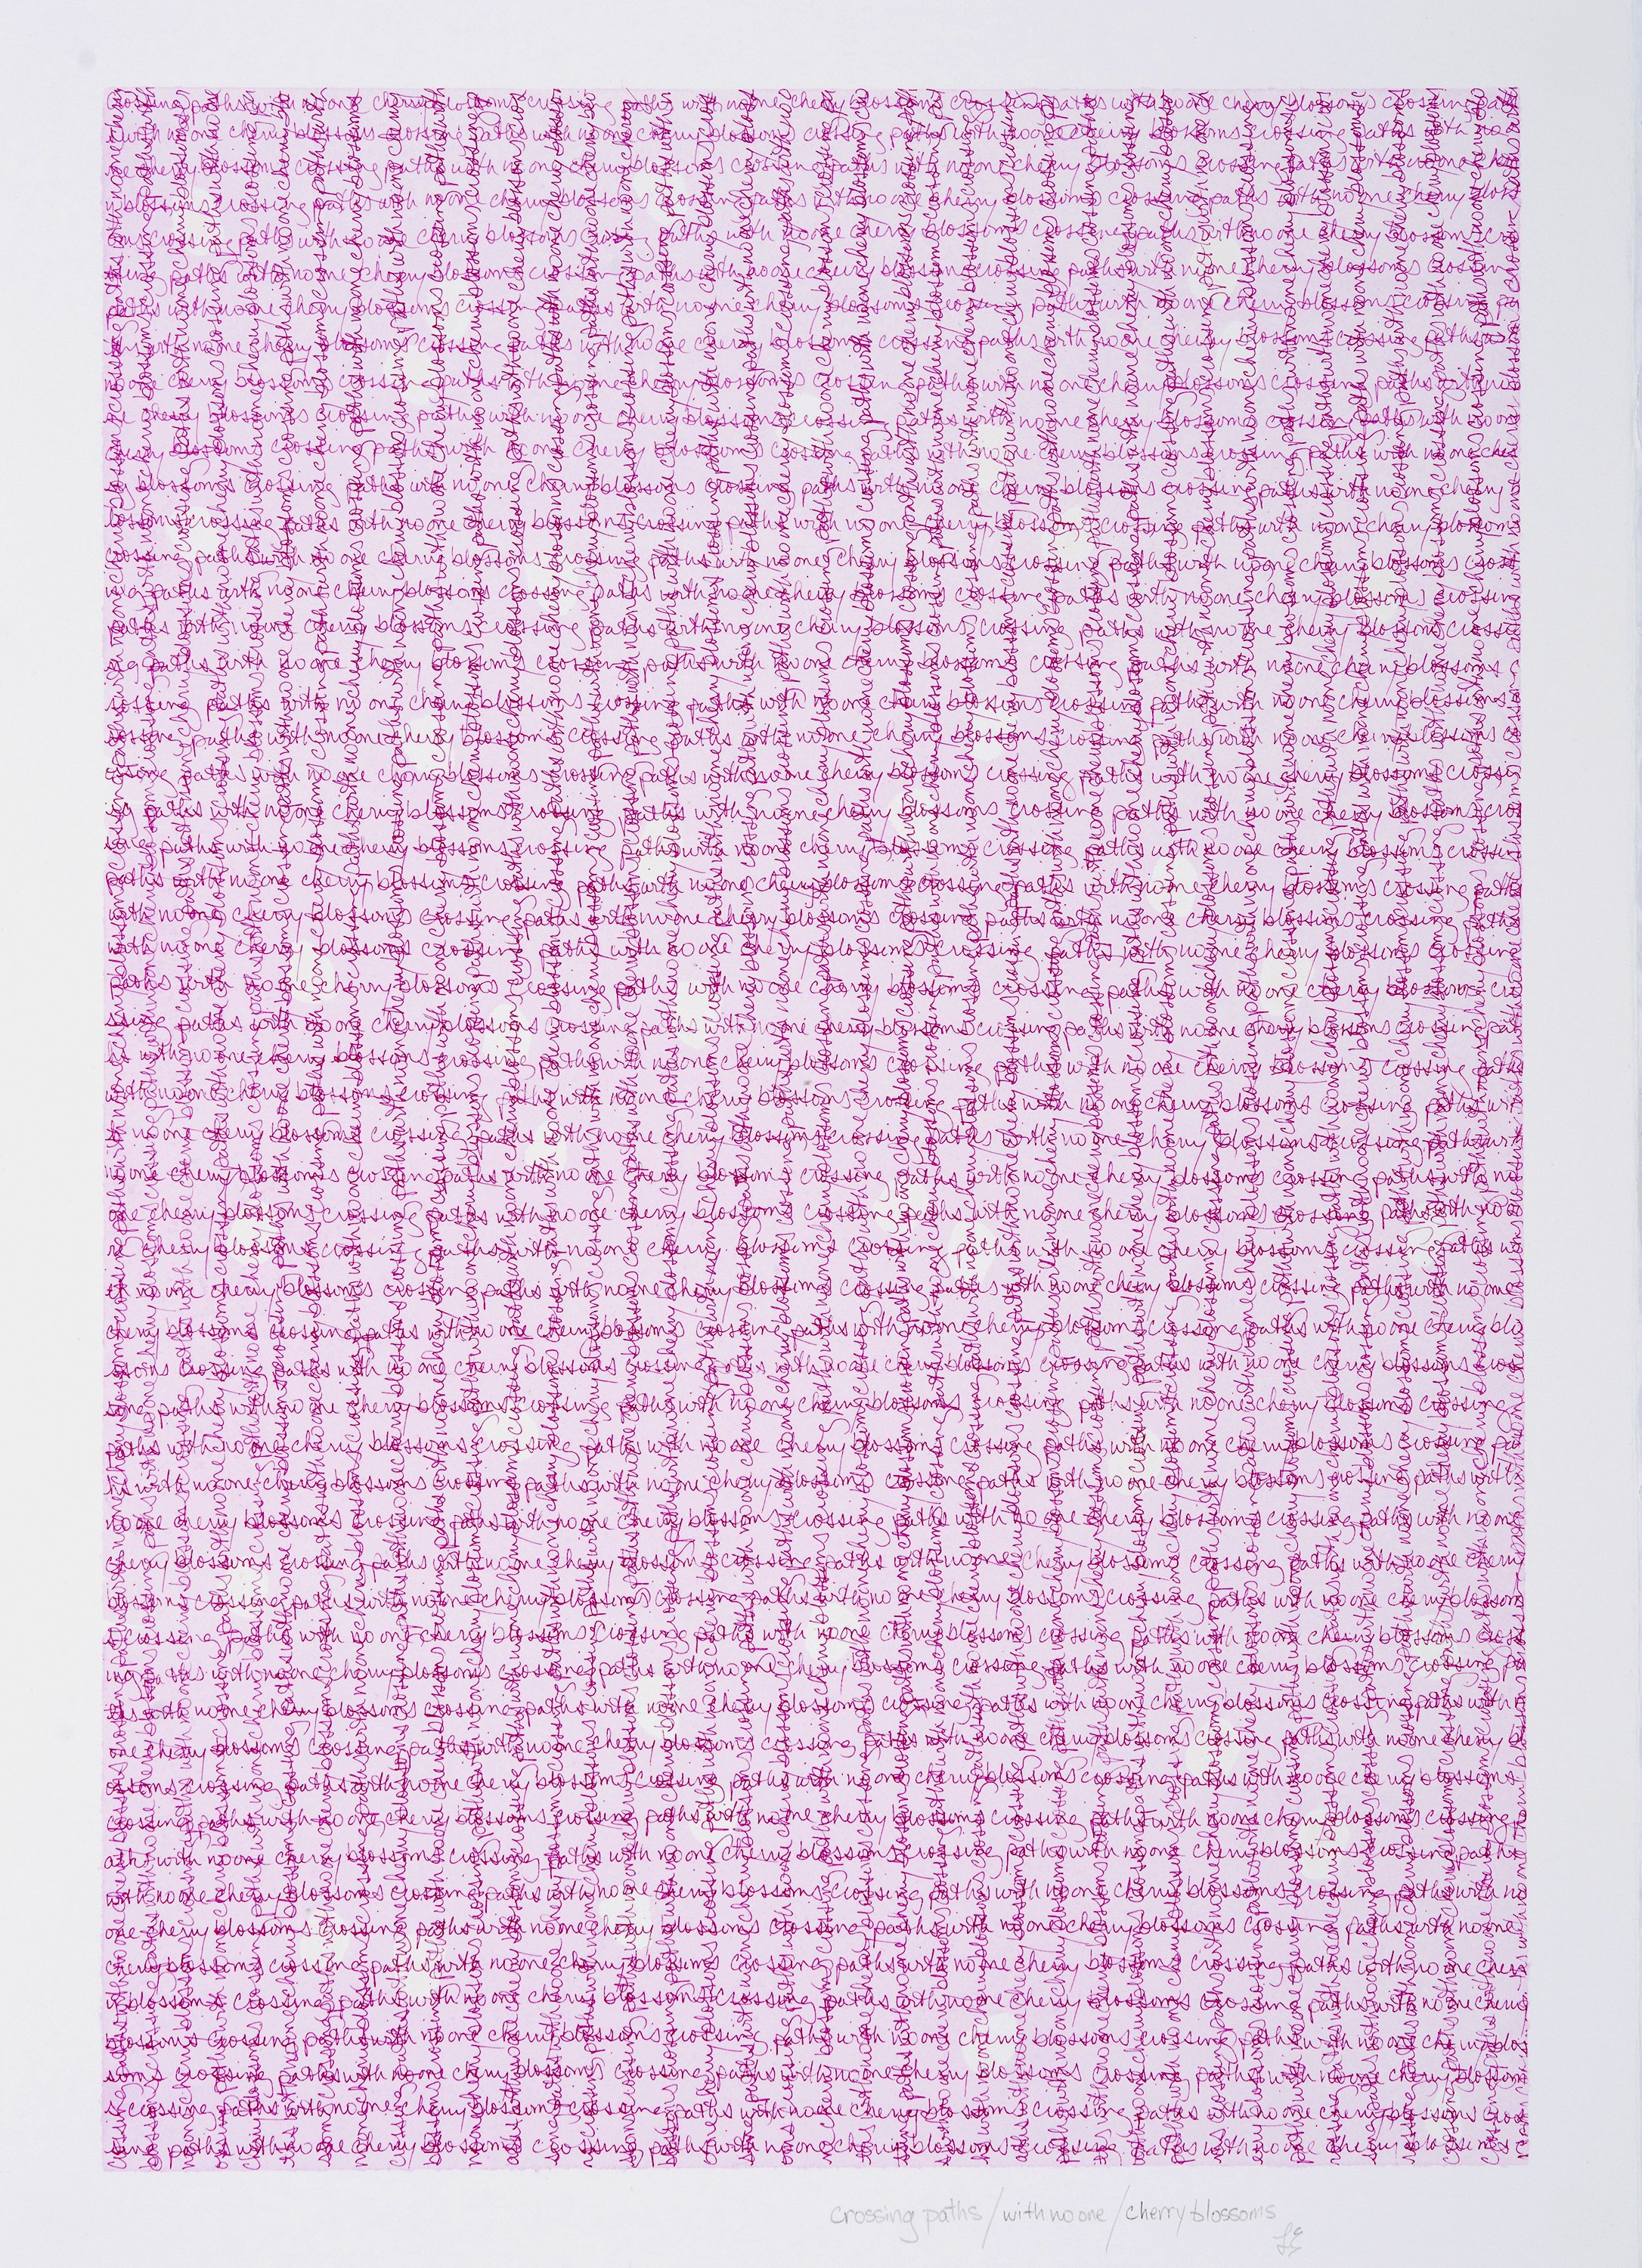 cherry blossoms, 2022 | acrylic, resist, ink, graphite & haiku on Fabriano paper | 20.5" x 14.5"